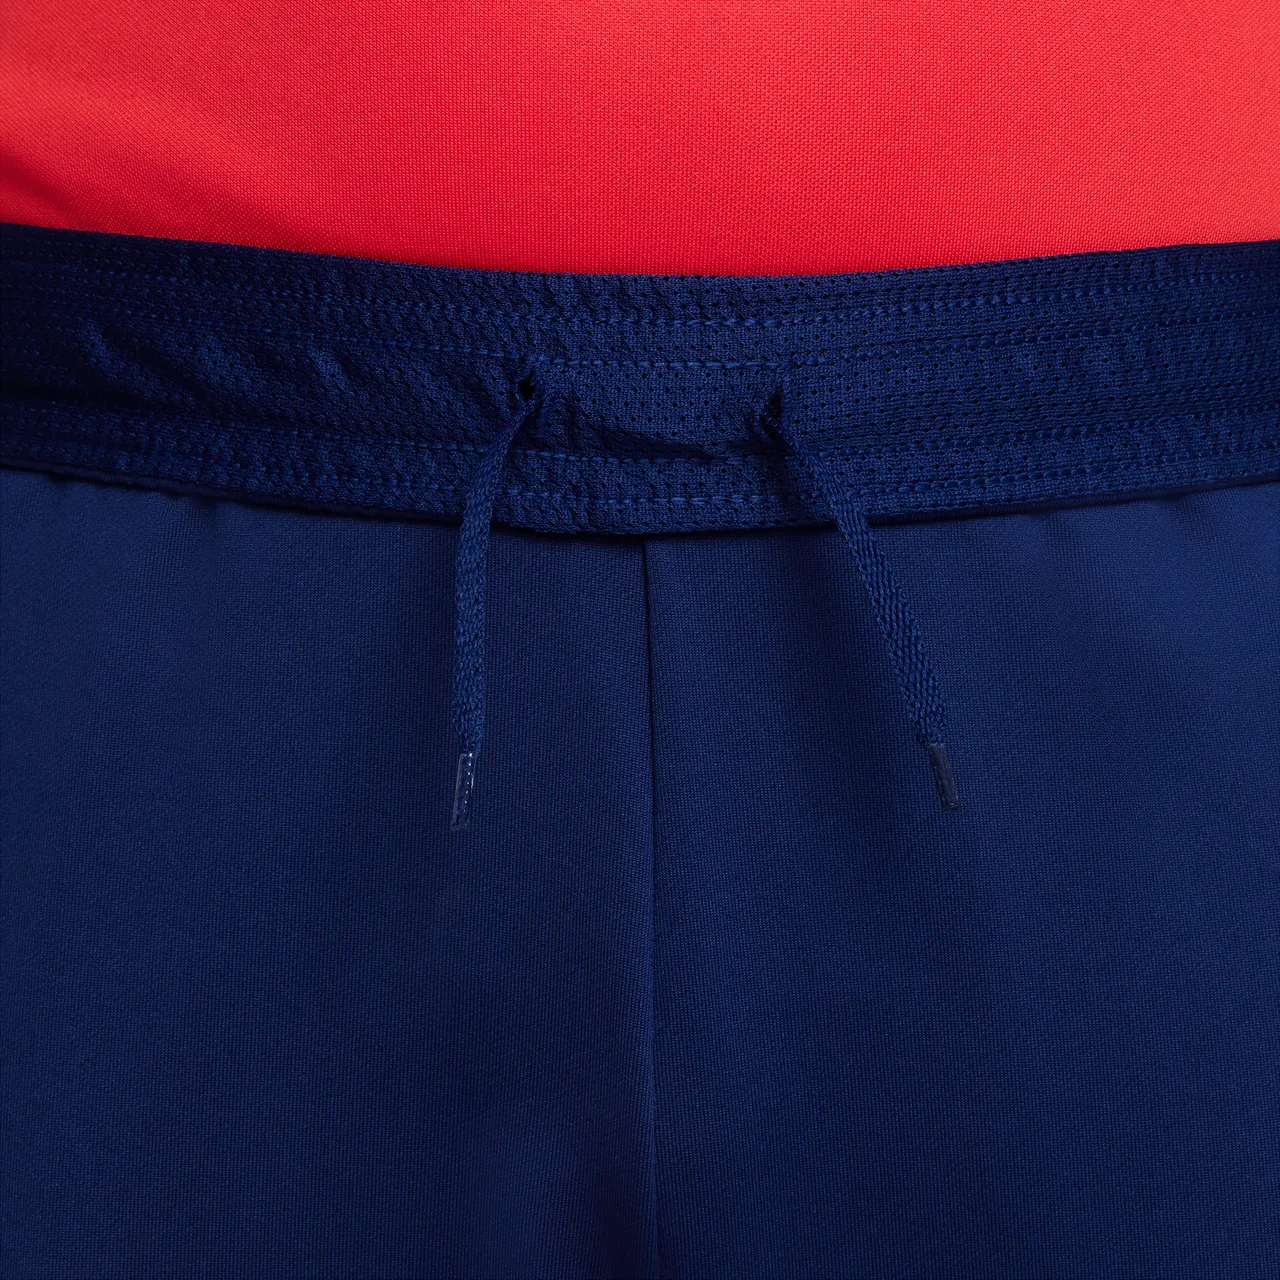 Atlético Madrid Strike Older Kids' Nike Dri-FIT Knit Football Pants - Blue - Polyester